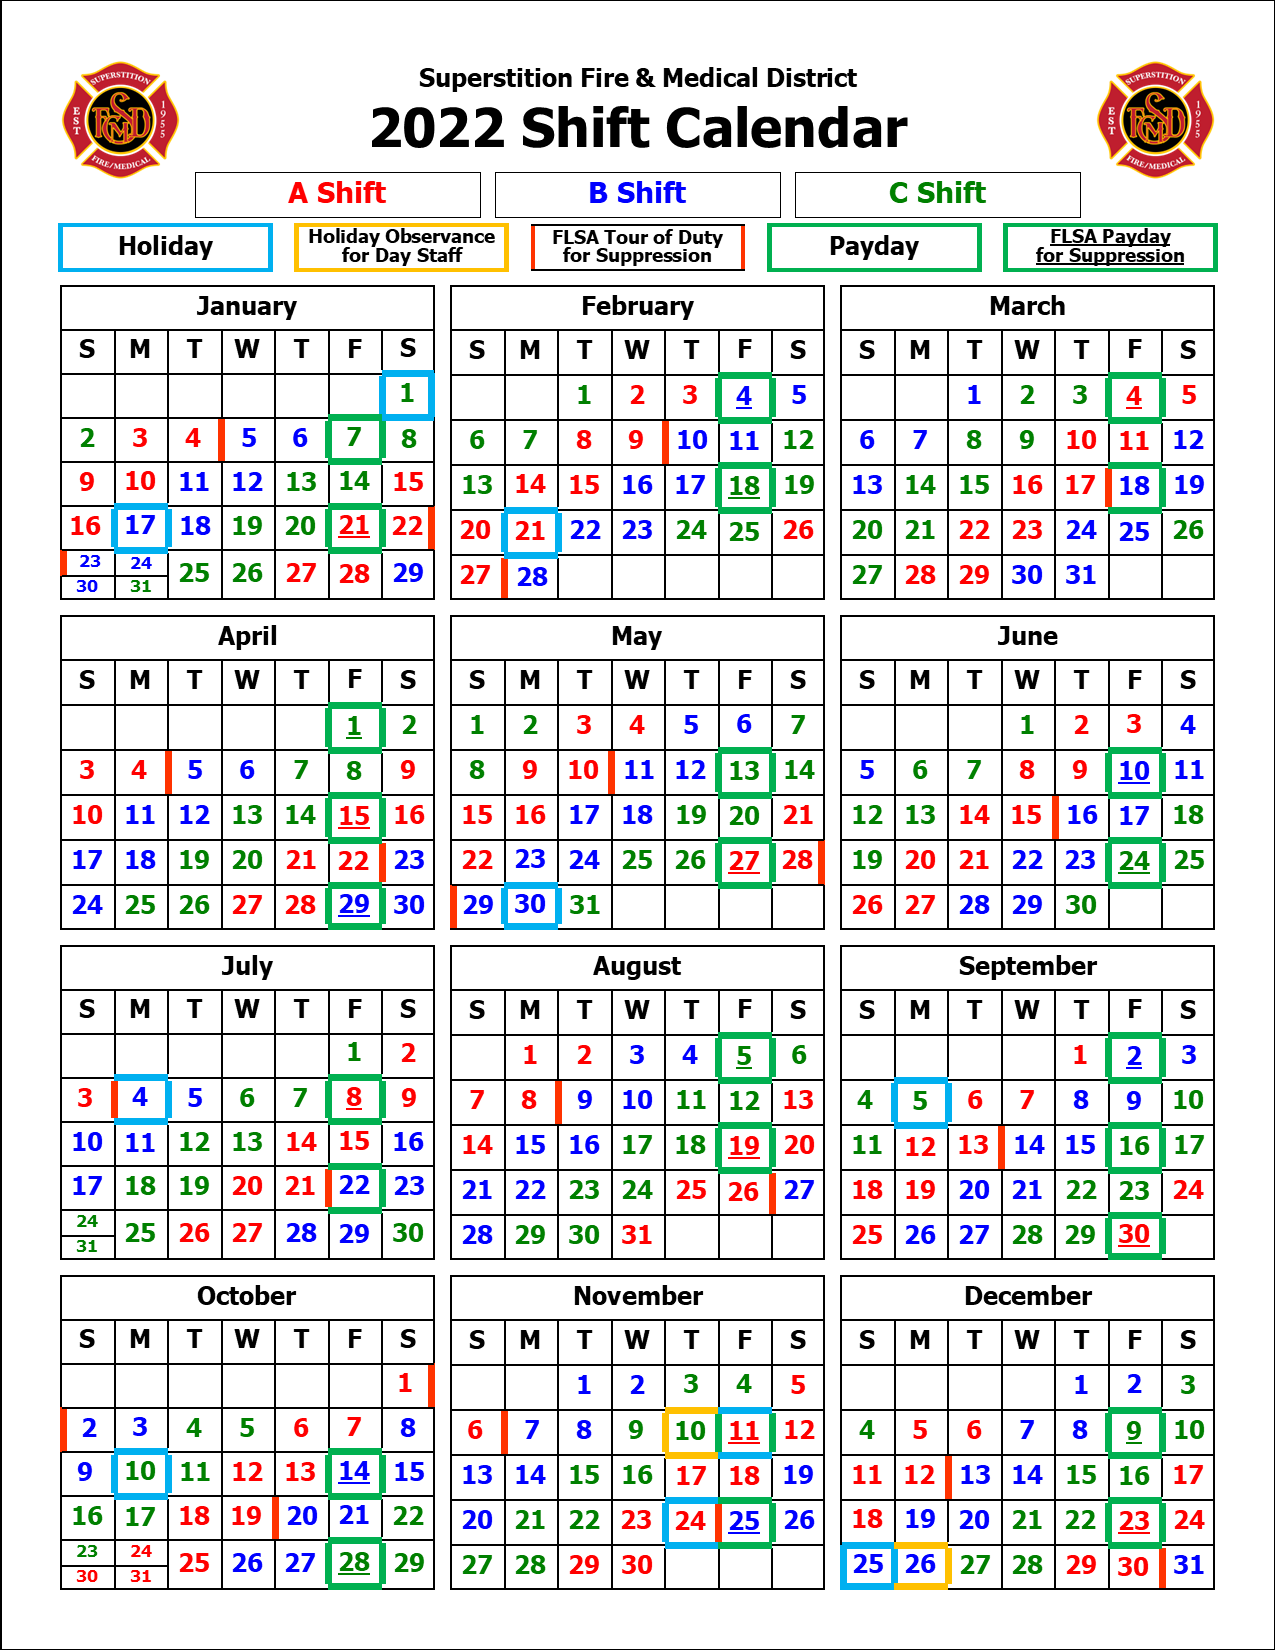 shift-calendars-superstition-fire-medical-district